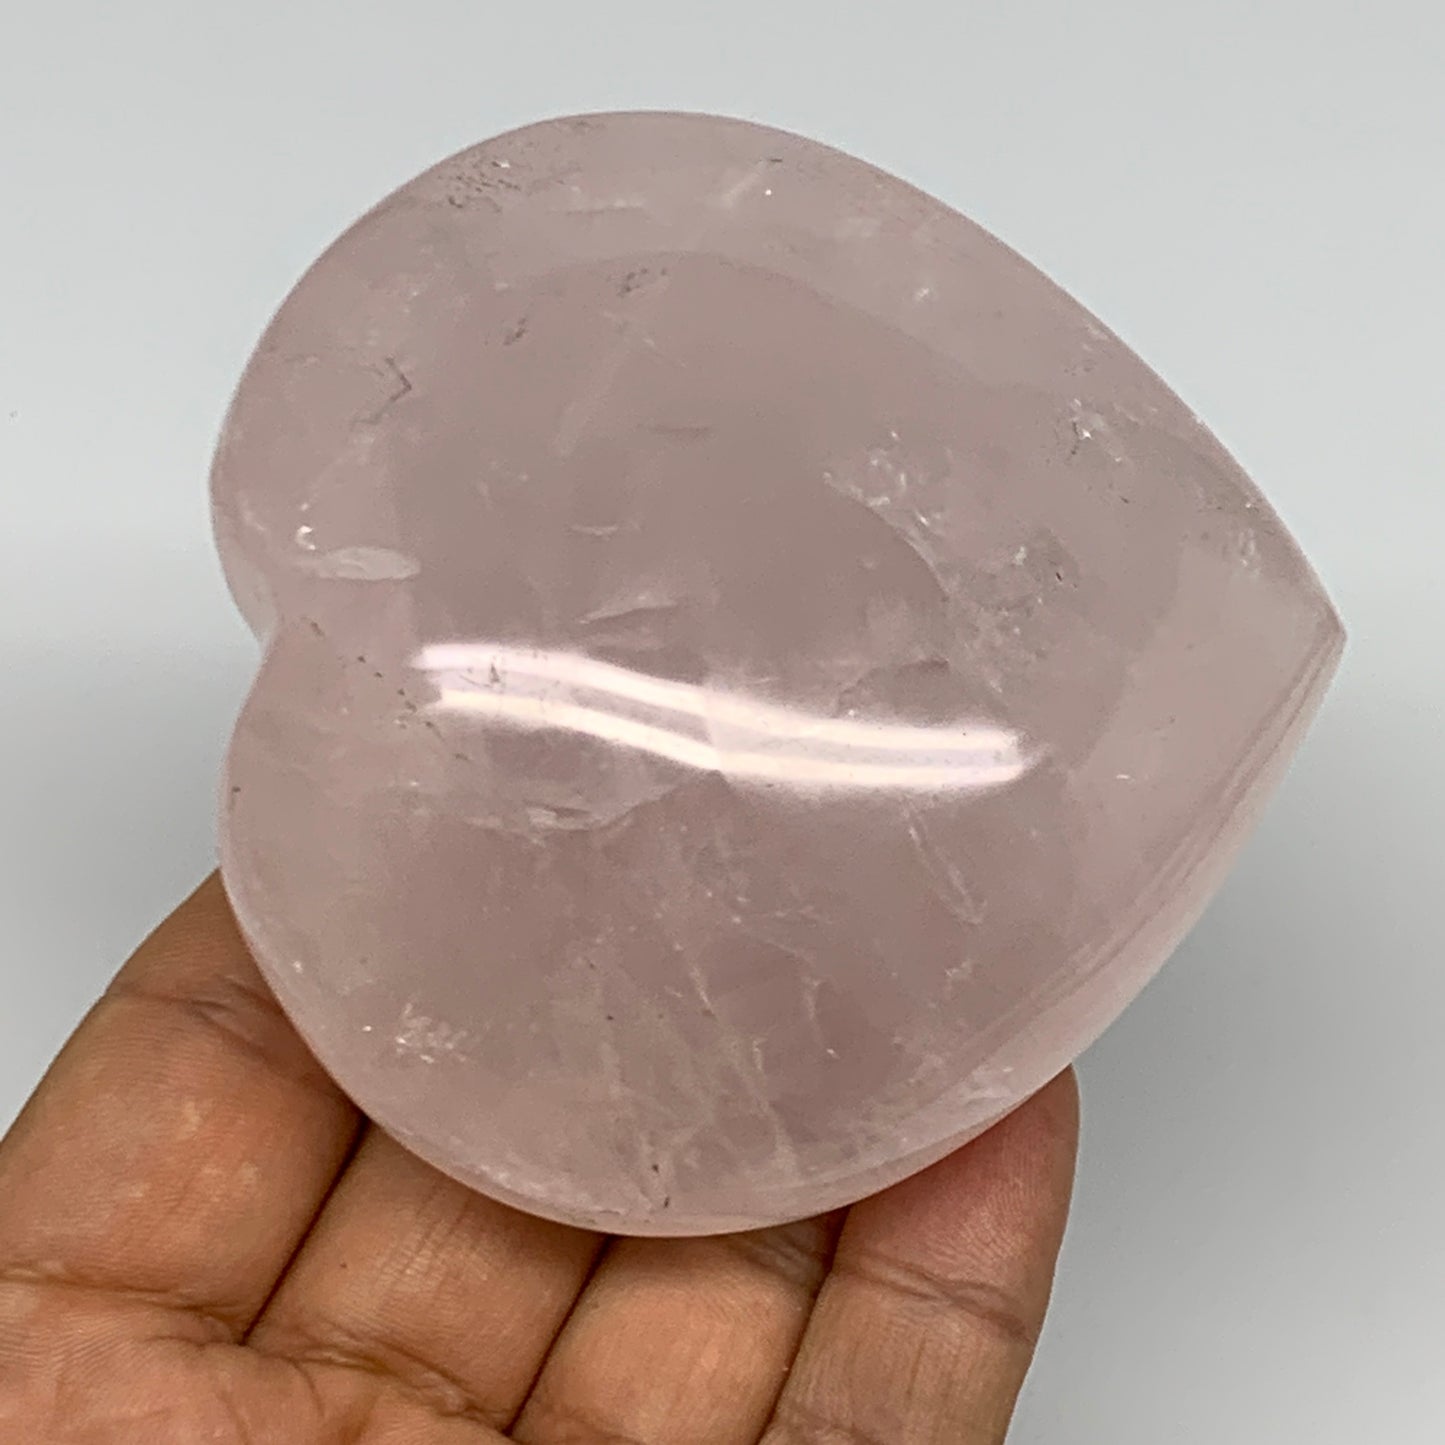 286.2g, 3" x 3.1" x 1.4" Rose Quartz Heart Healing Crystal @Madagascar, B17394